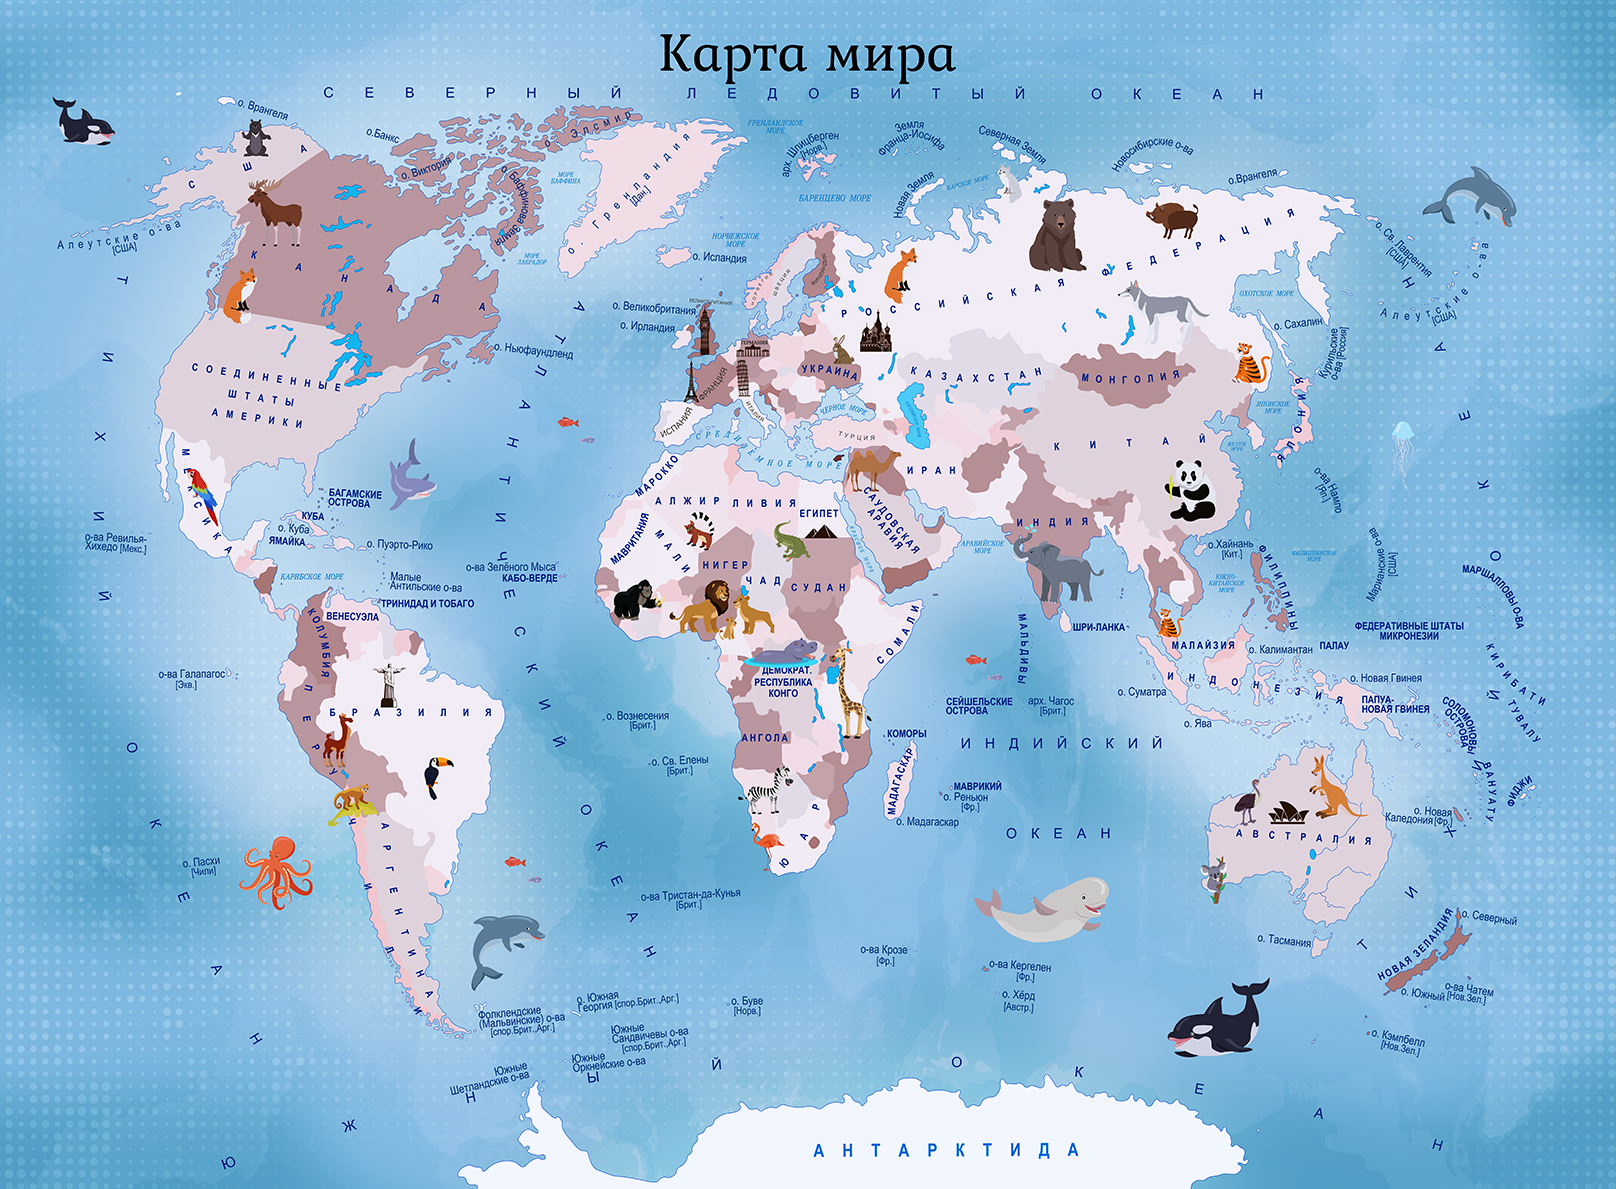 Карта мира на русском языке на синем фоне